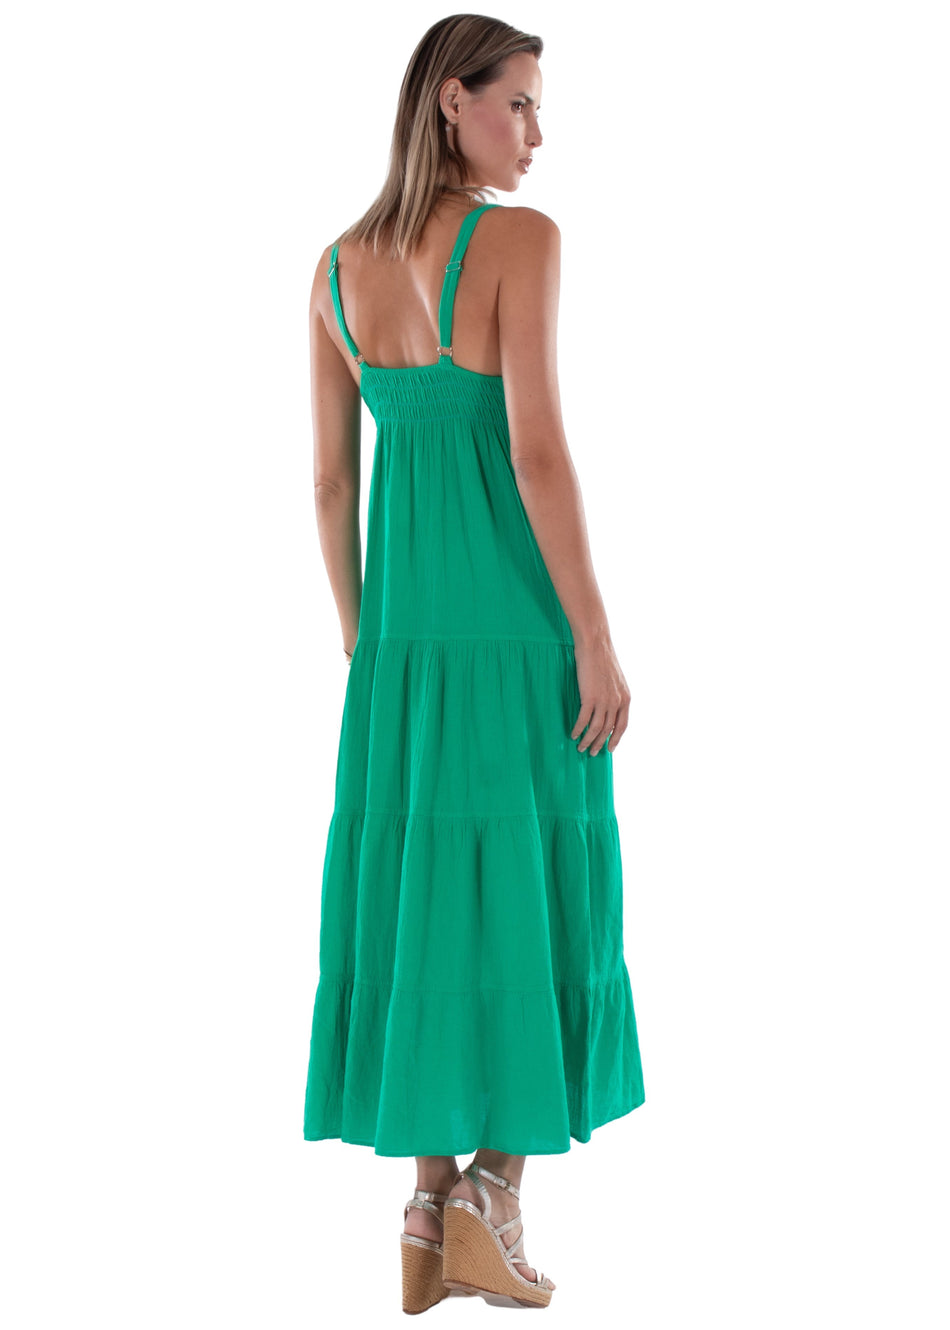 NW1430 - Green Cotton Dress